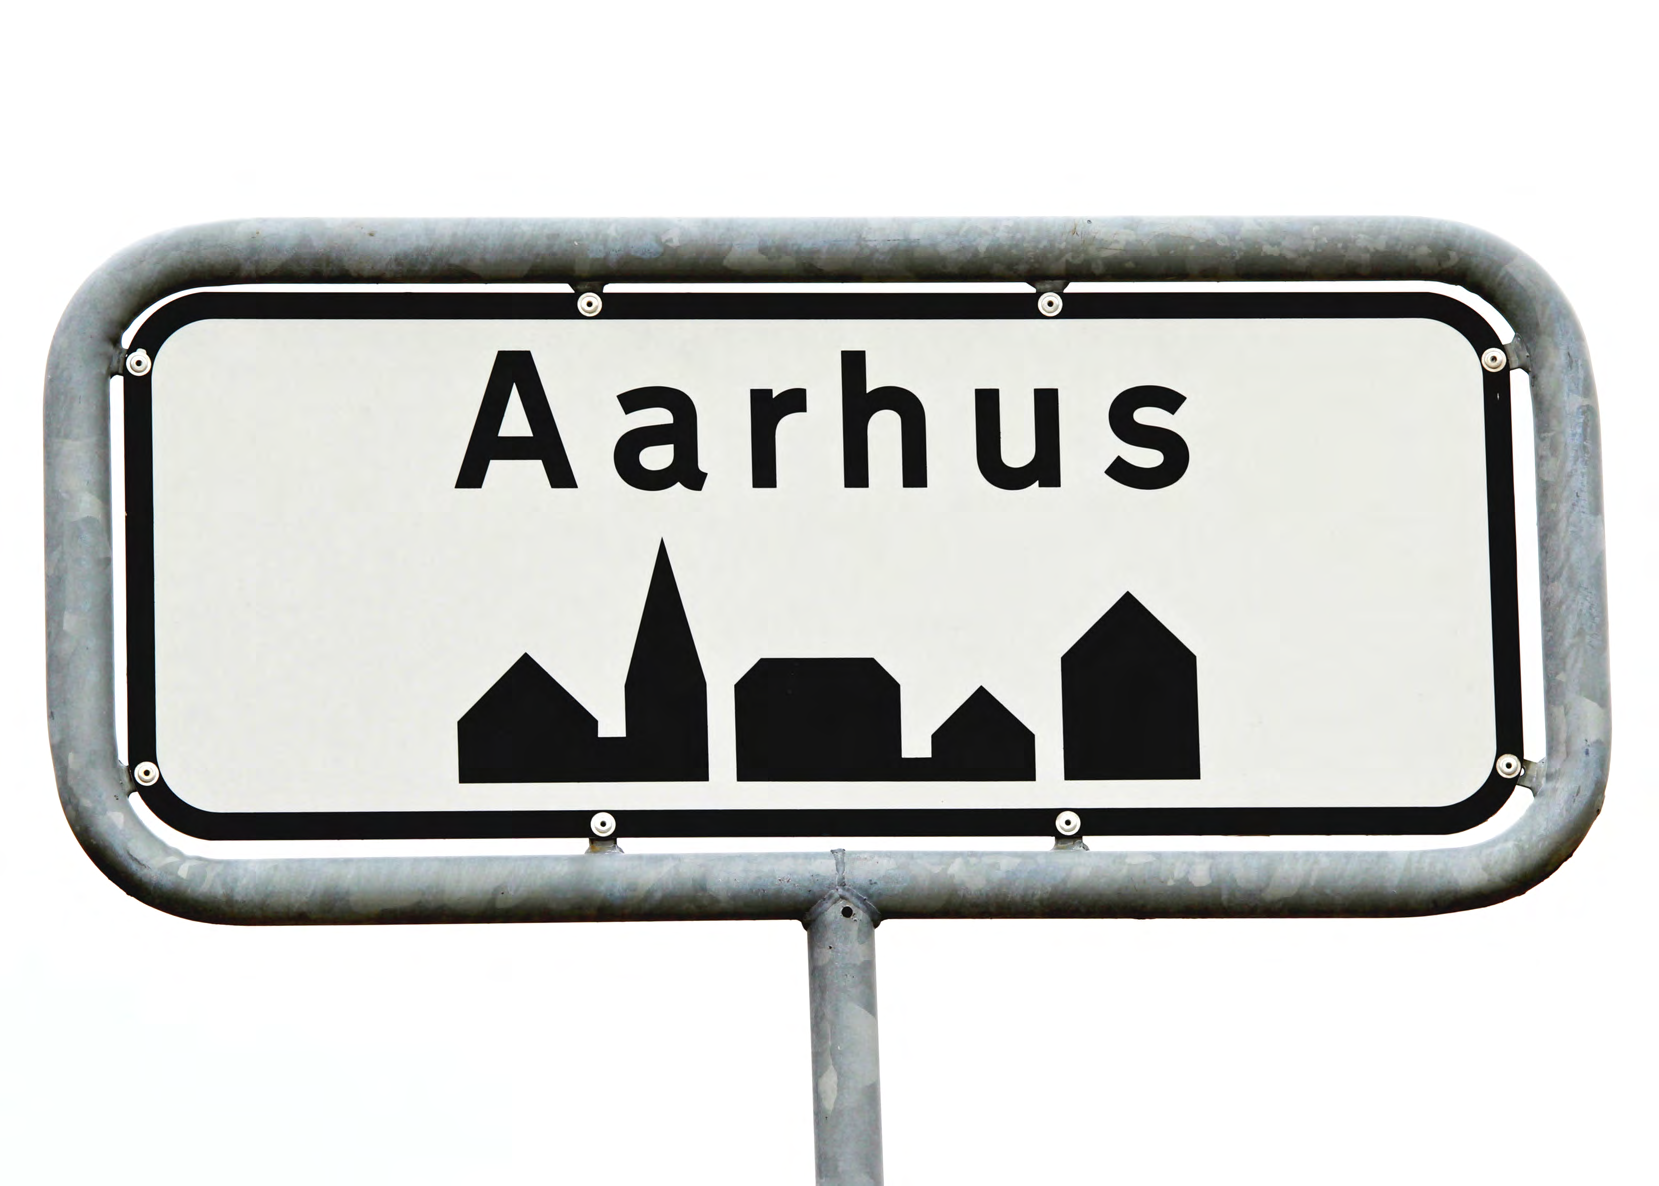 Demensvenlighed på tværs I Aarhus er det hele byen, der er demensvenlig, ikke bare kommunens tilbud.